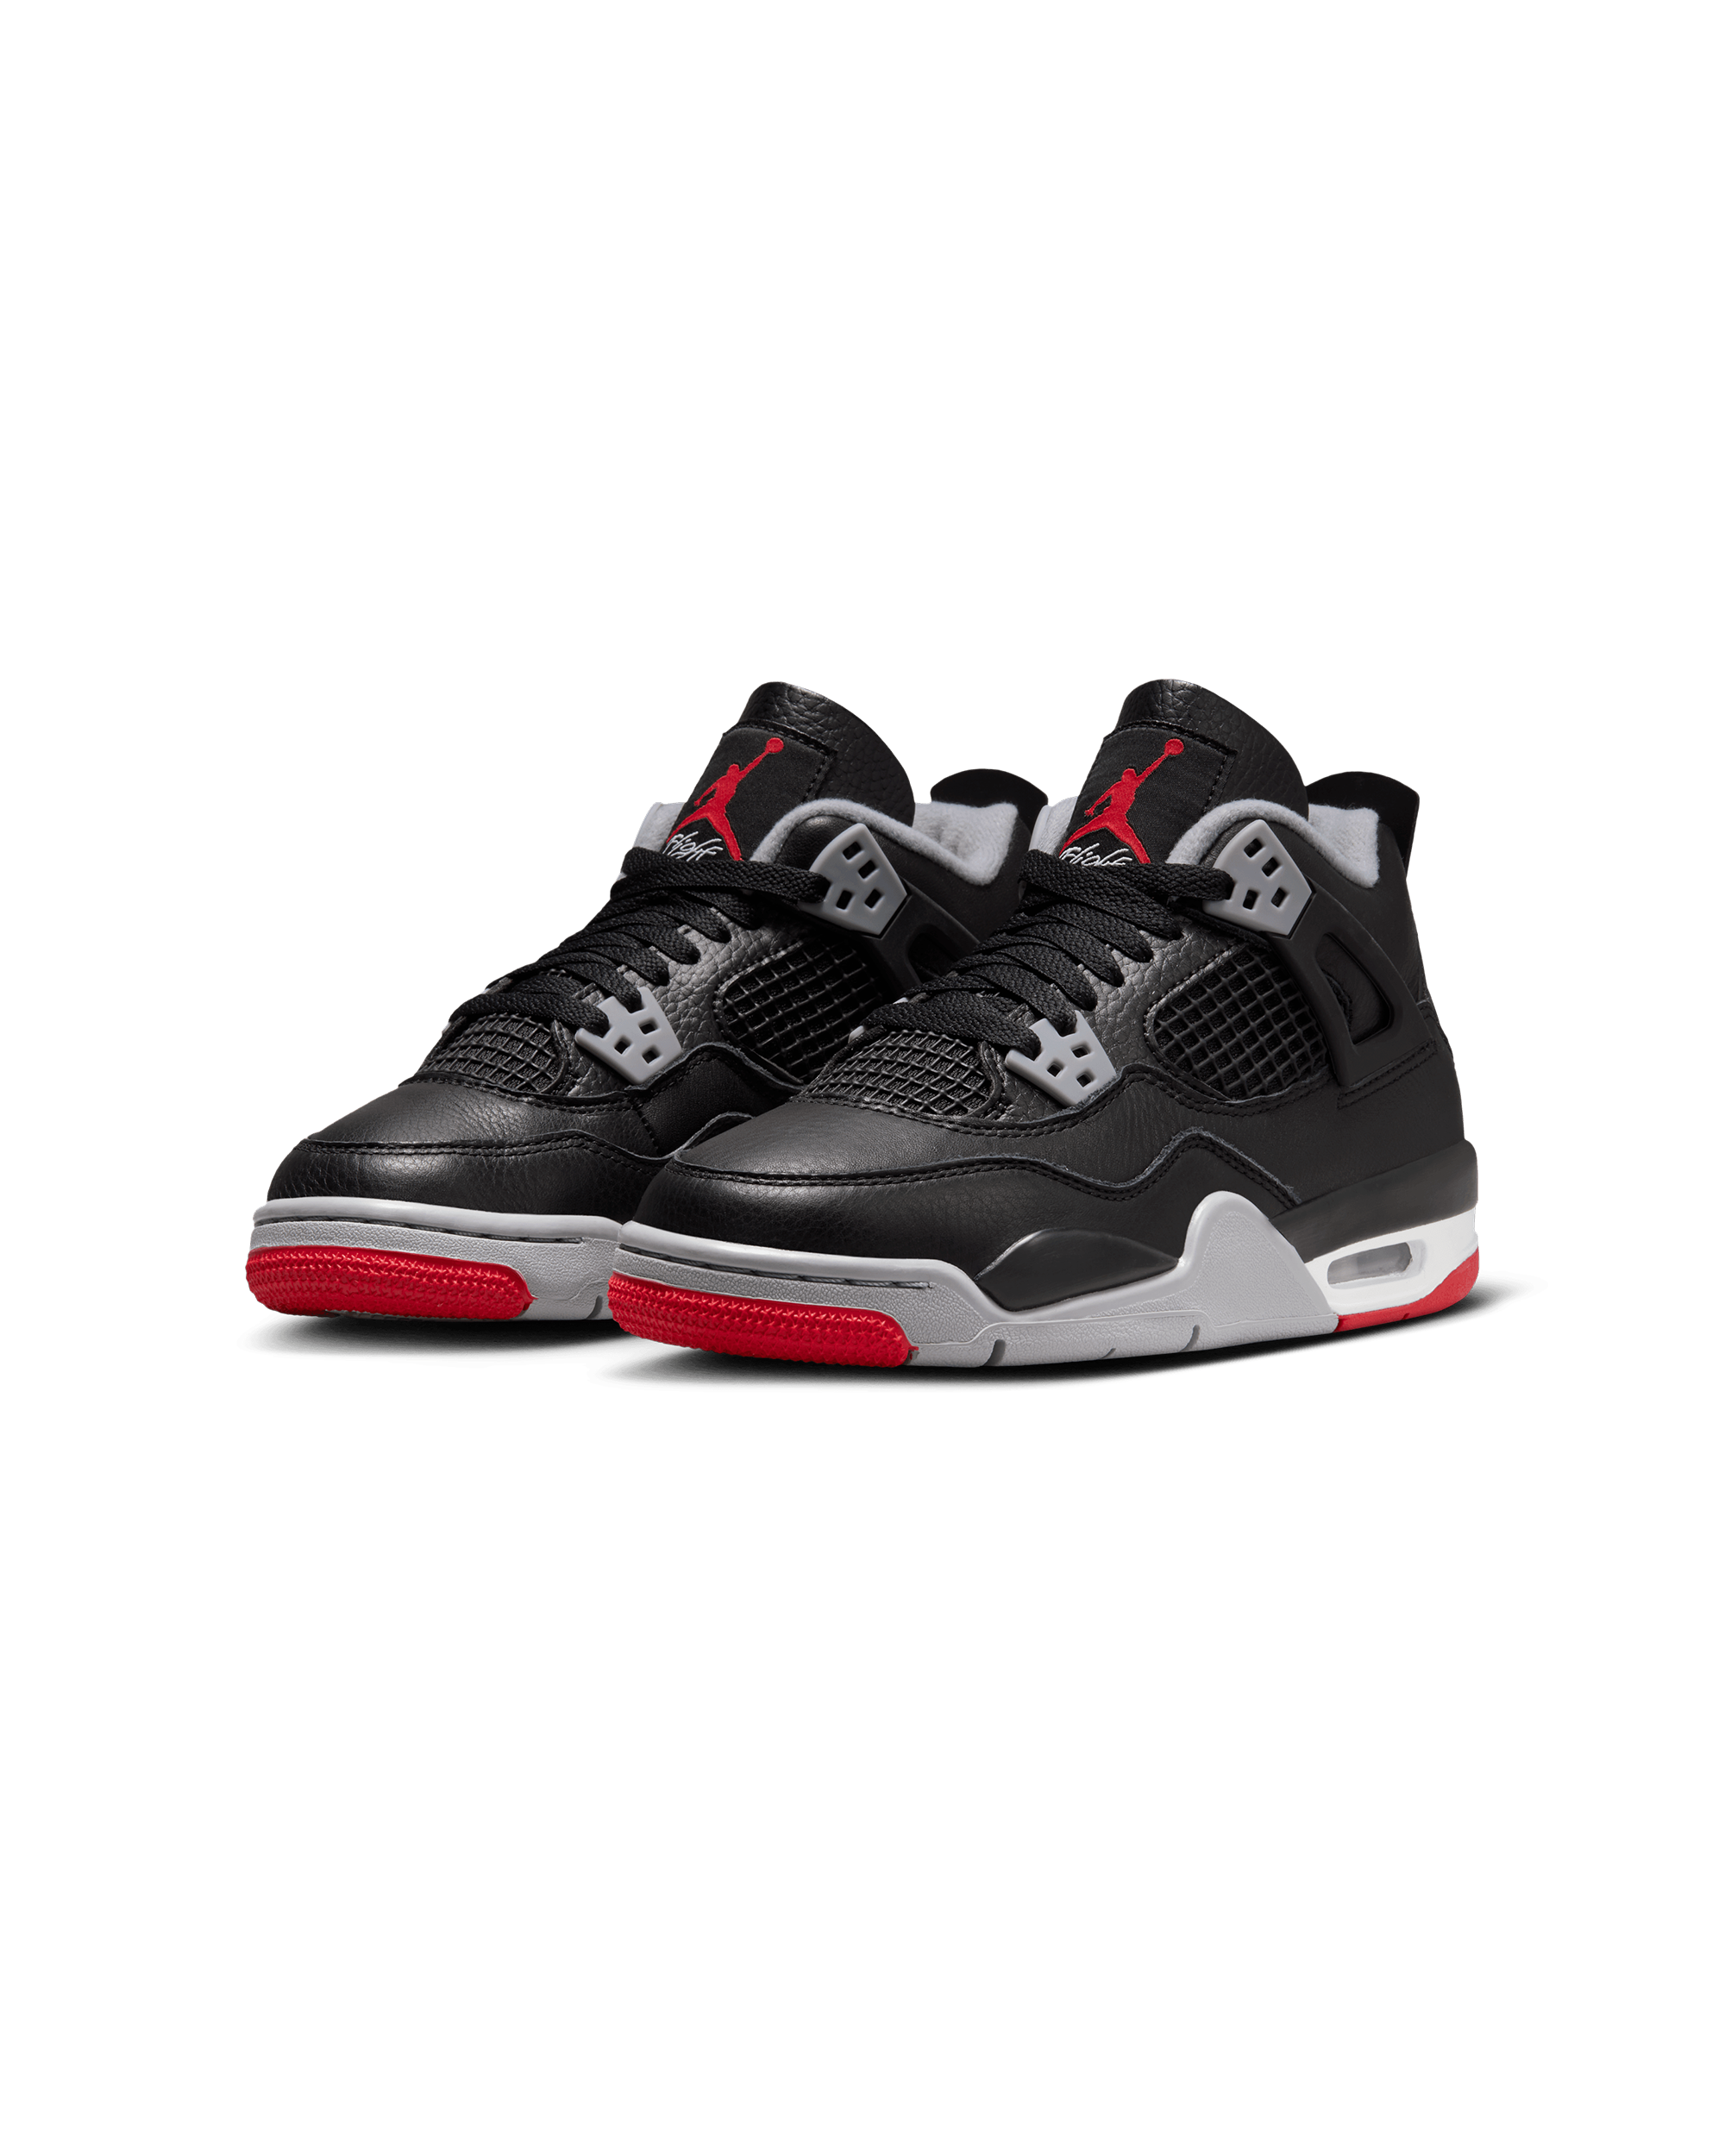 Air Jordan 4 Retro "Bred Reimagined" (GS) - Black / Fire Red / Grey / White